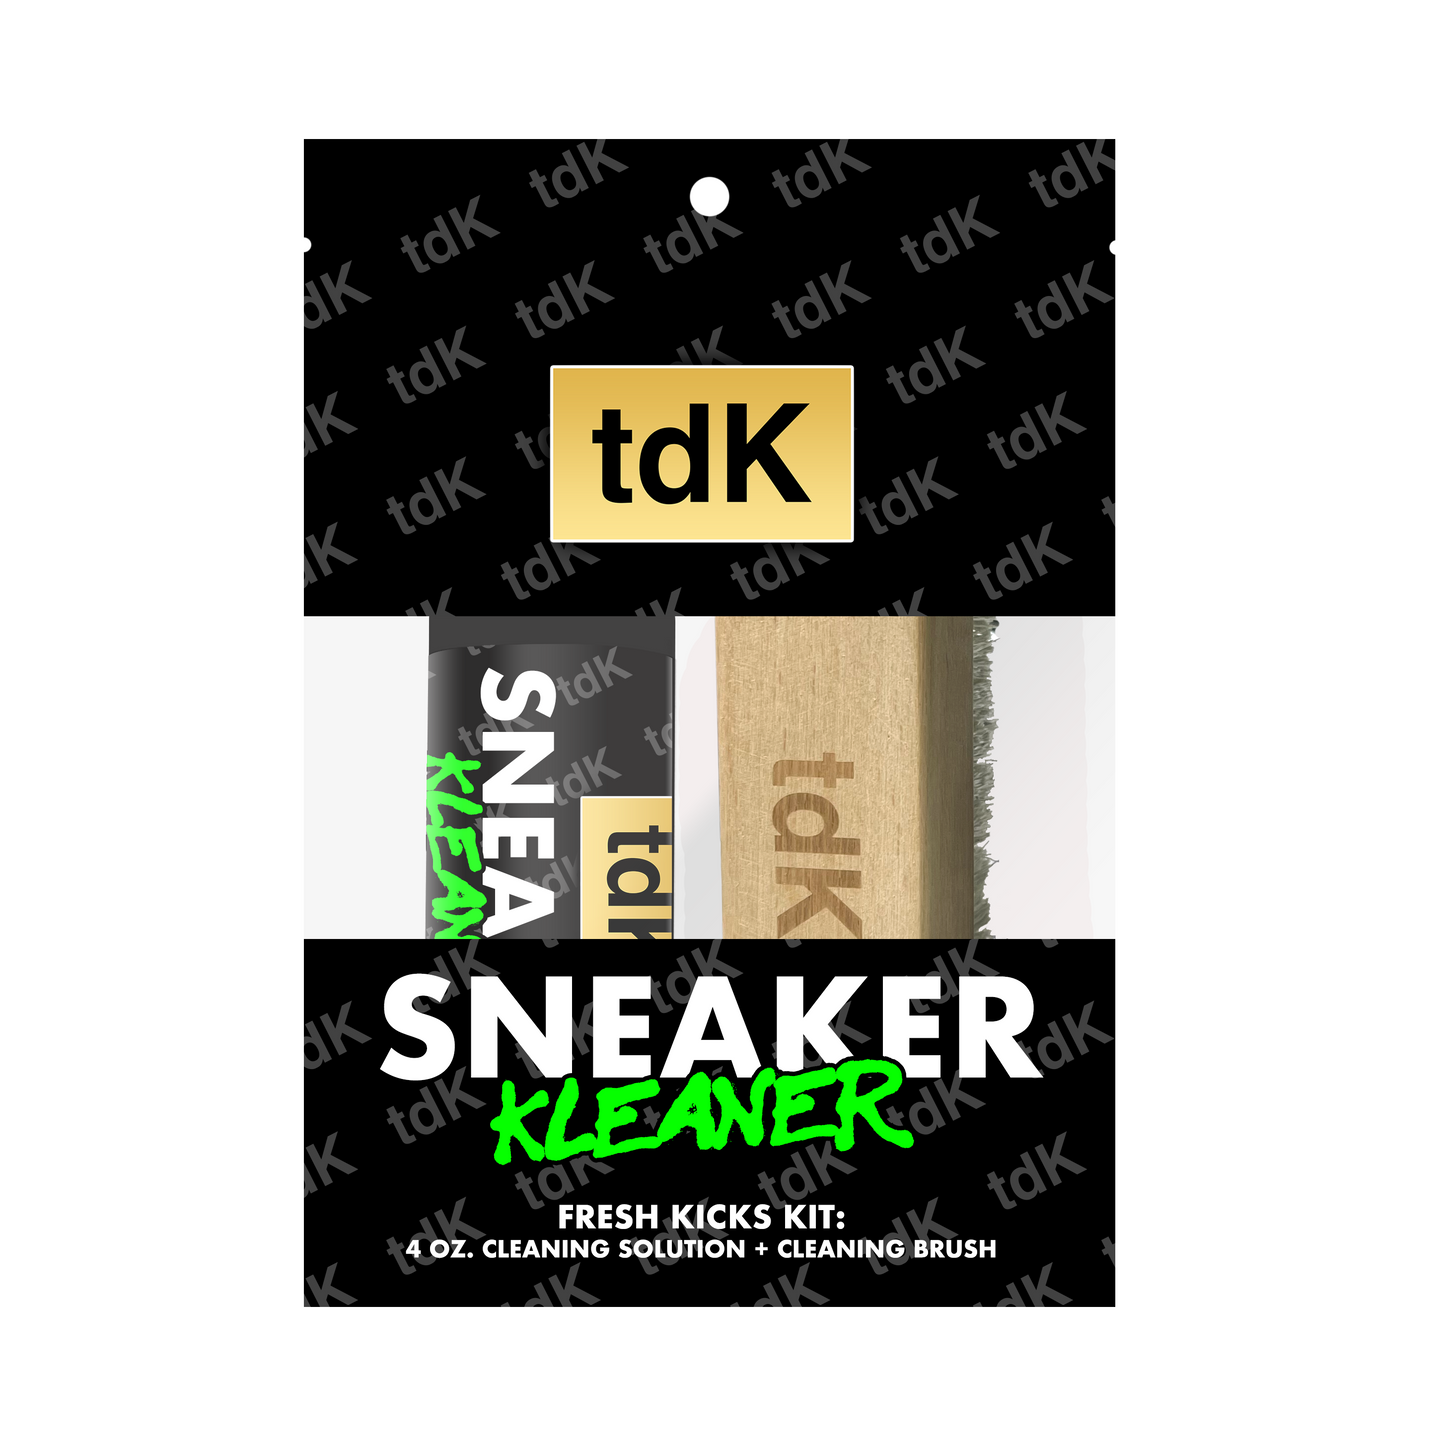 tdK Shoe Cleaner